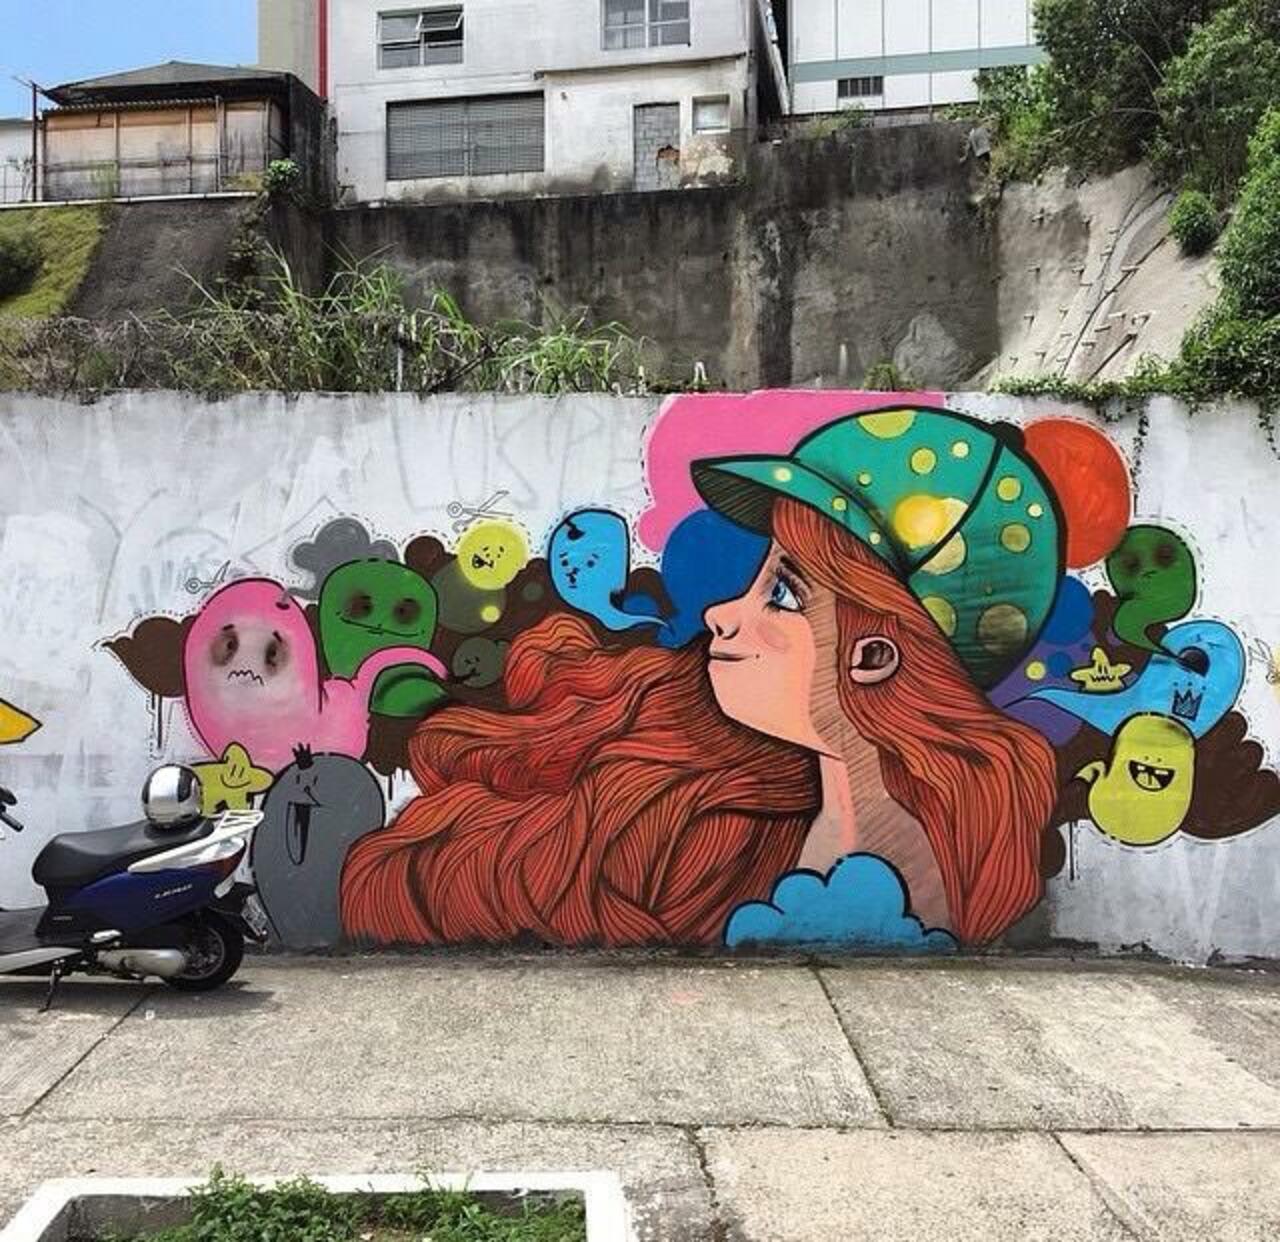 Endearing Street Art by Vupulos in São Paulo, Brazil 

#art #mural #graffiti #streetart http://t.co/ijVf0vETR1